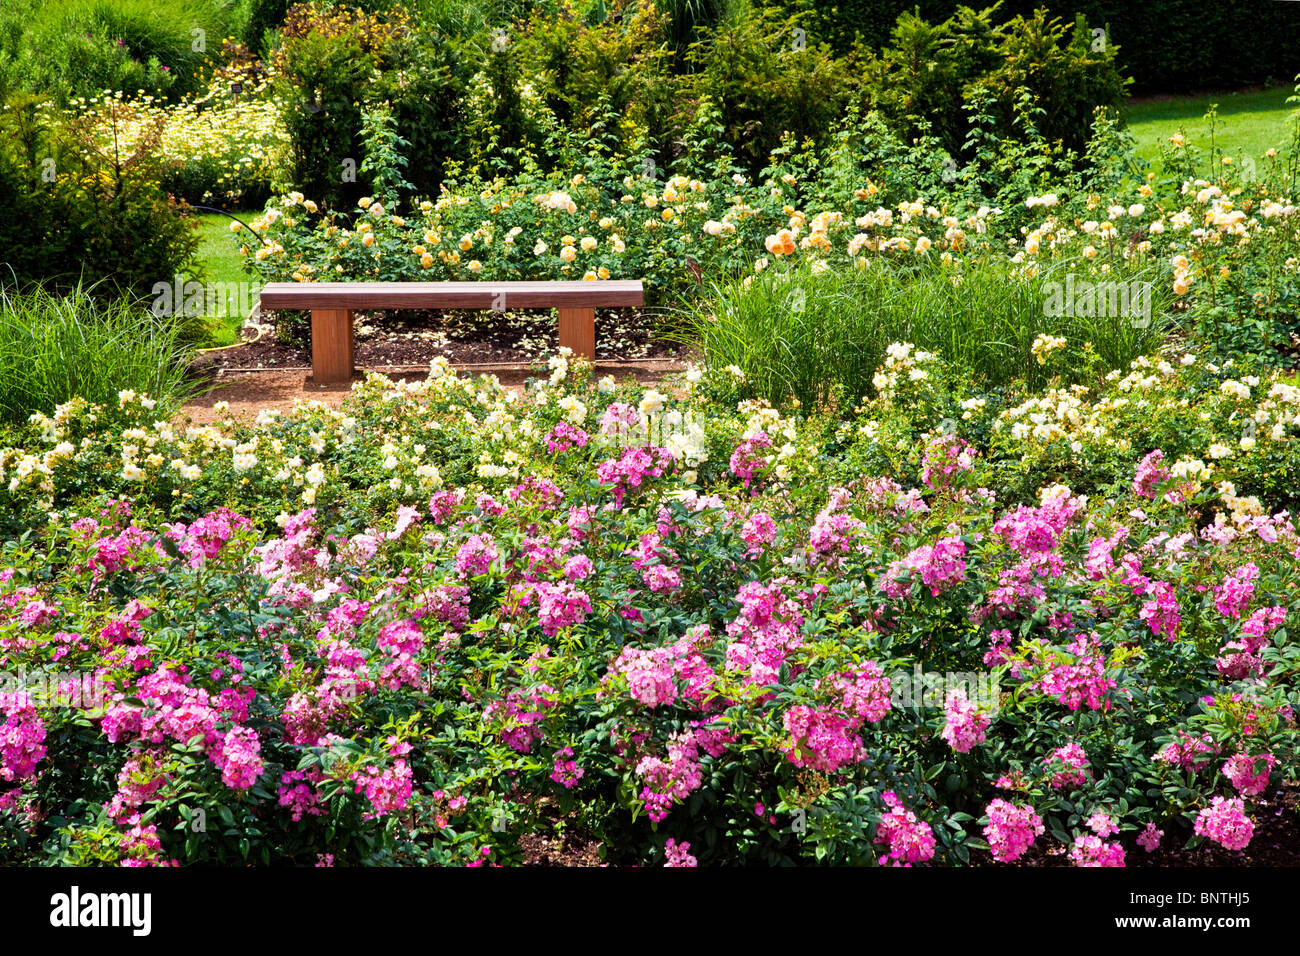 A wooden garden seat or bench in an English summer rose garden. Rosa 'Ballerina' in foreground. Stock Photo